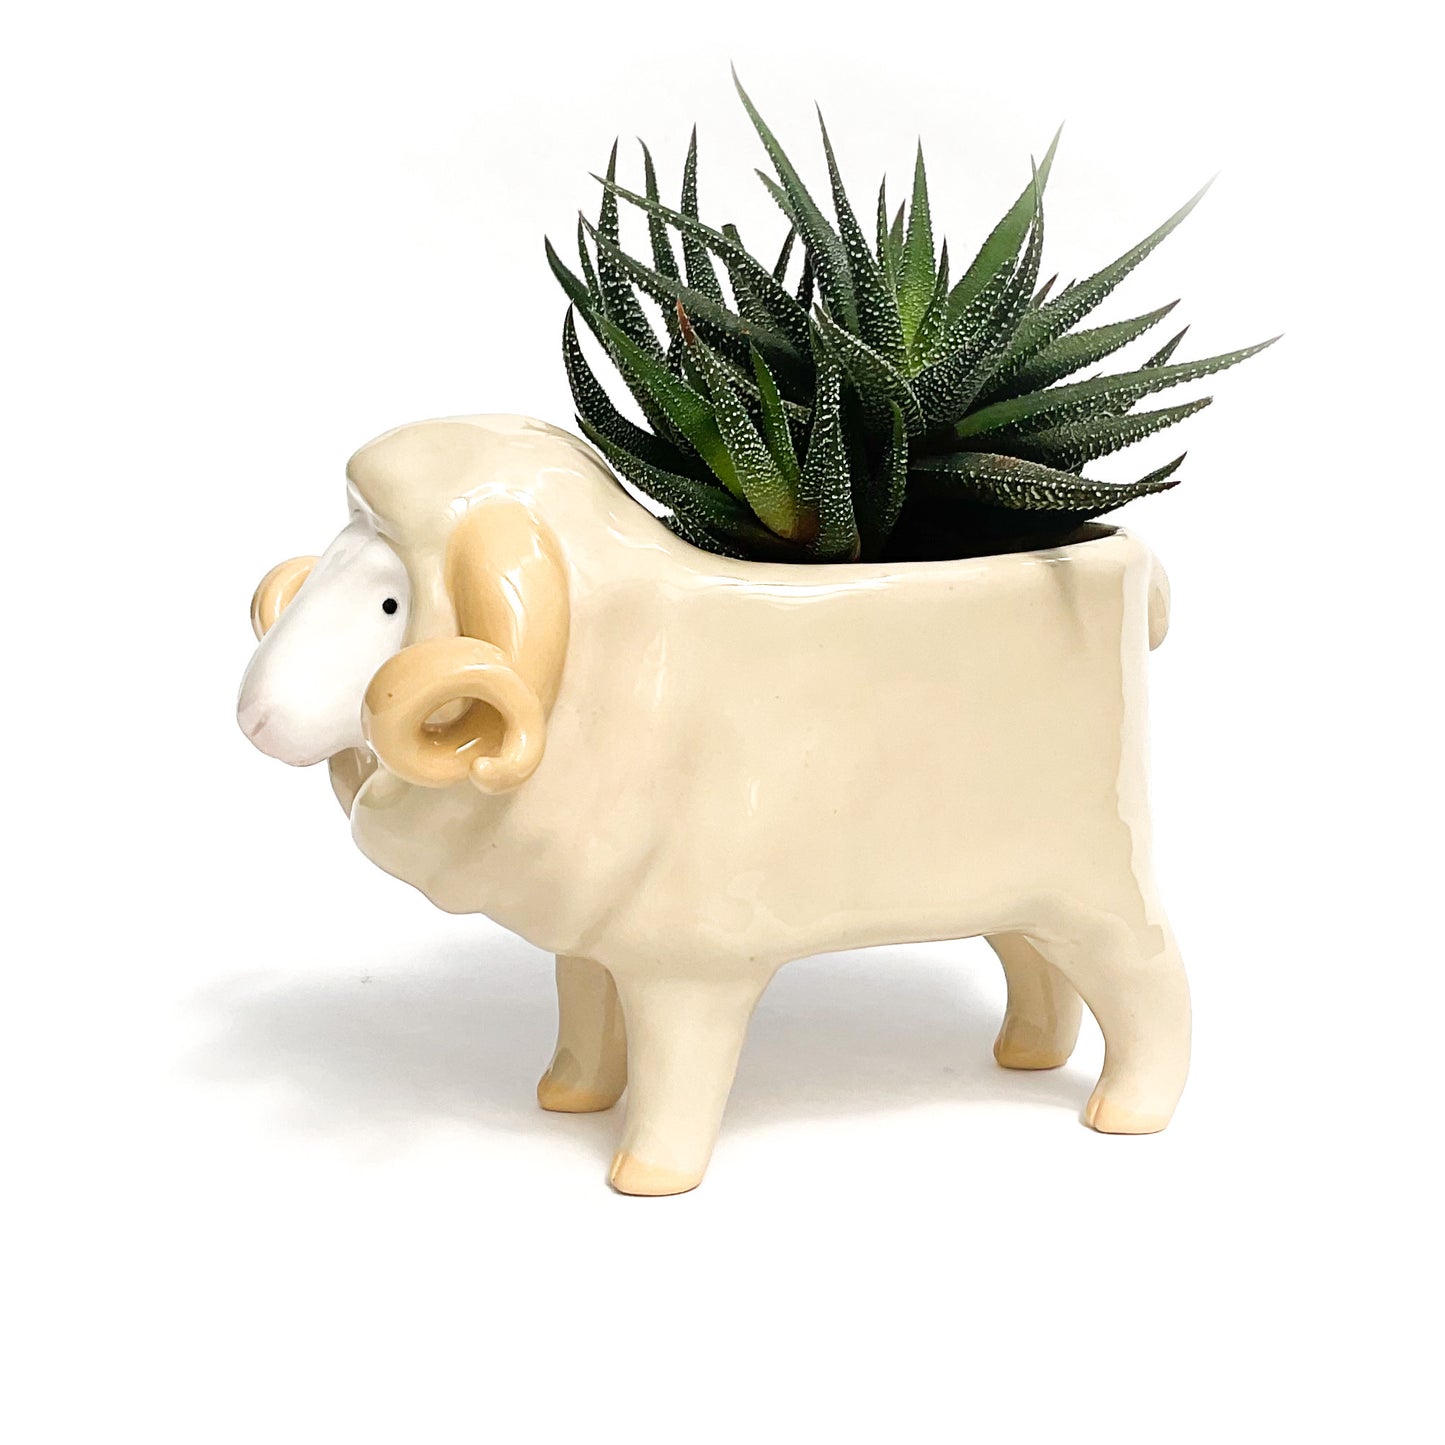 Merino Pot - Ceramic Sheep Planter